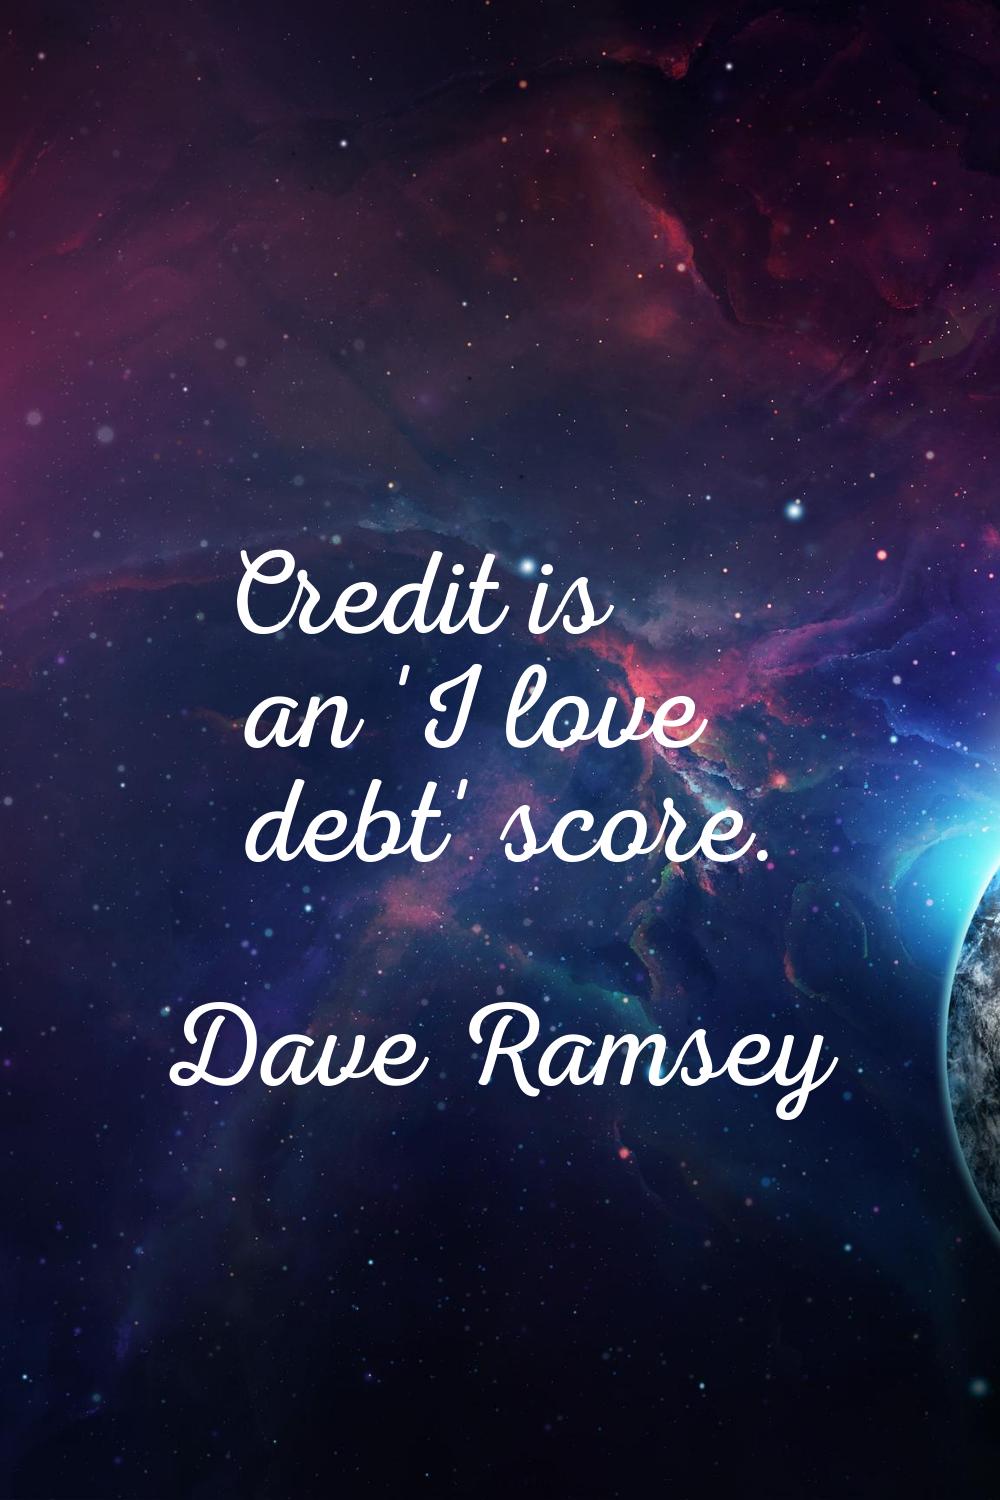 Credit is an 'I love debt' score.